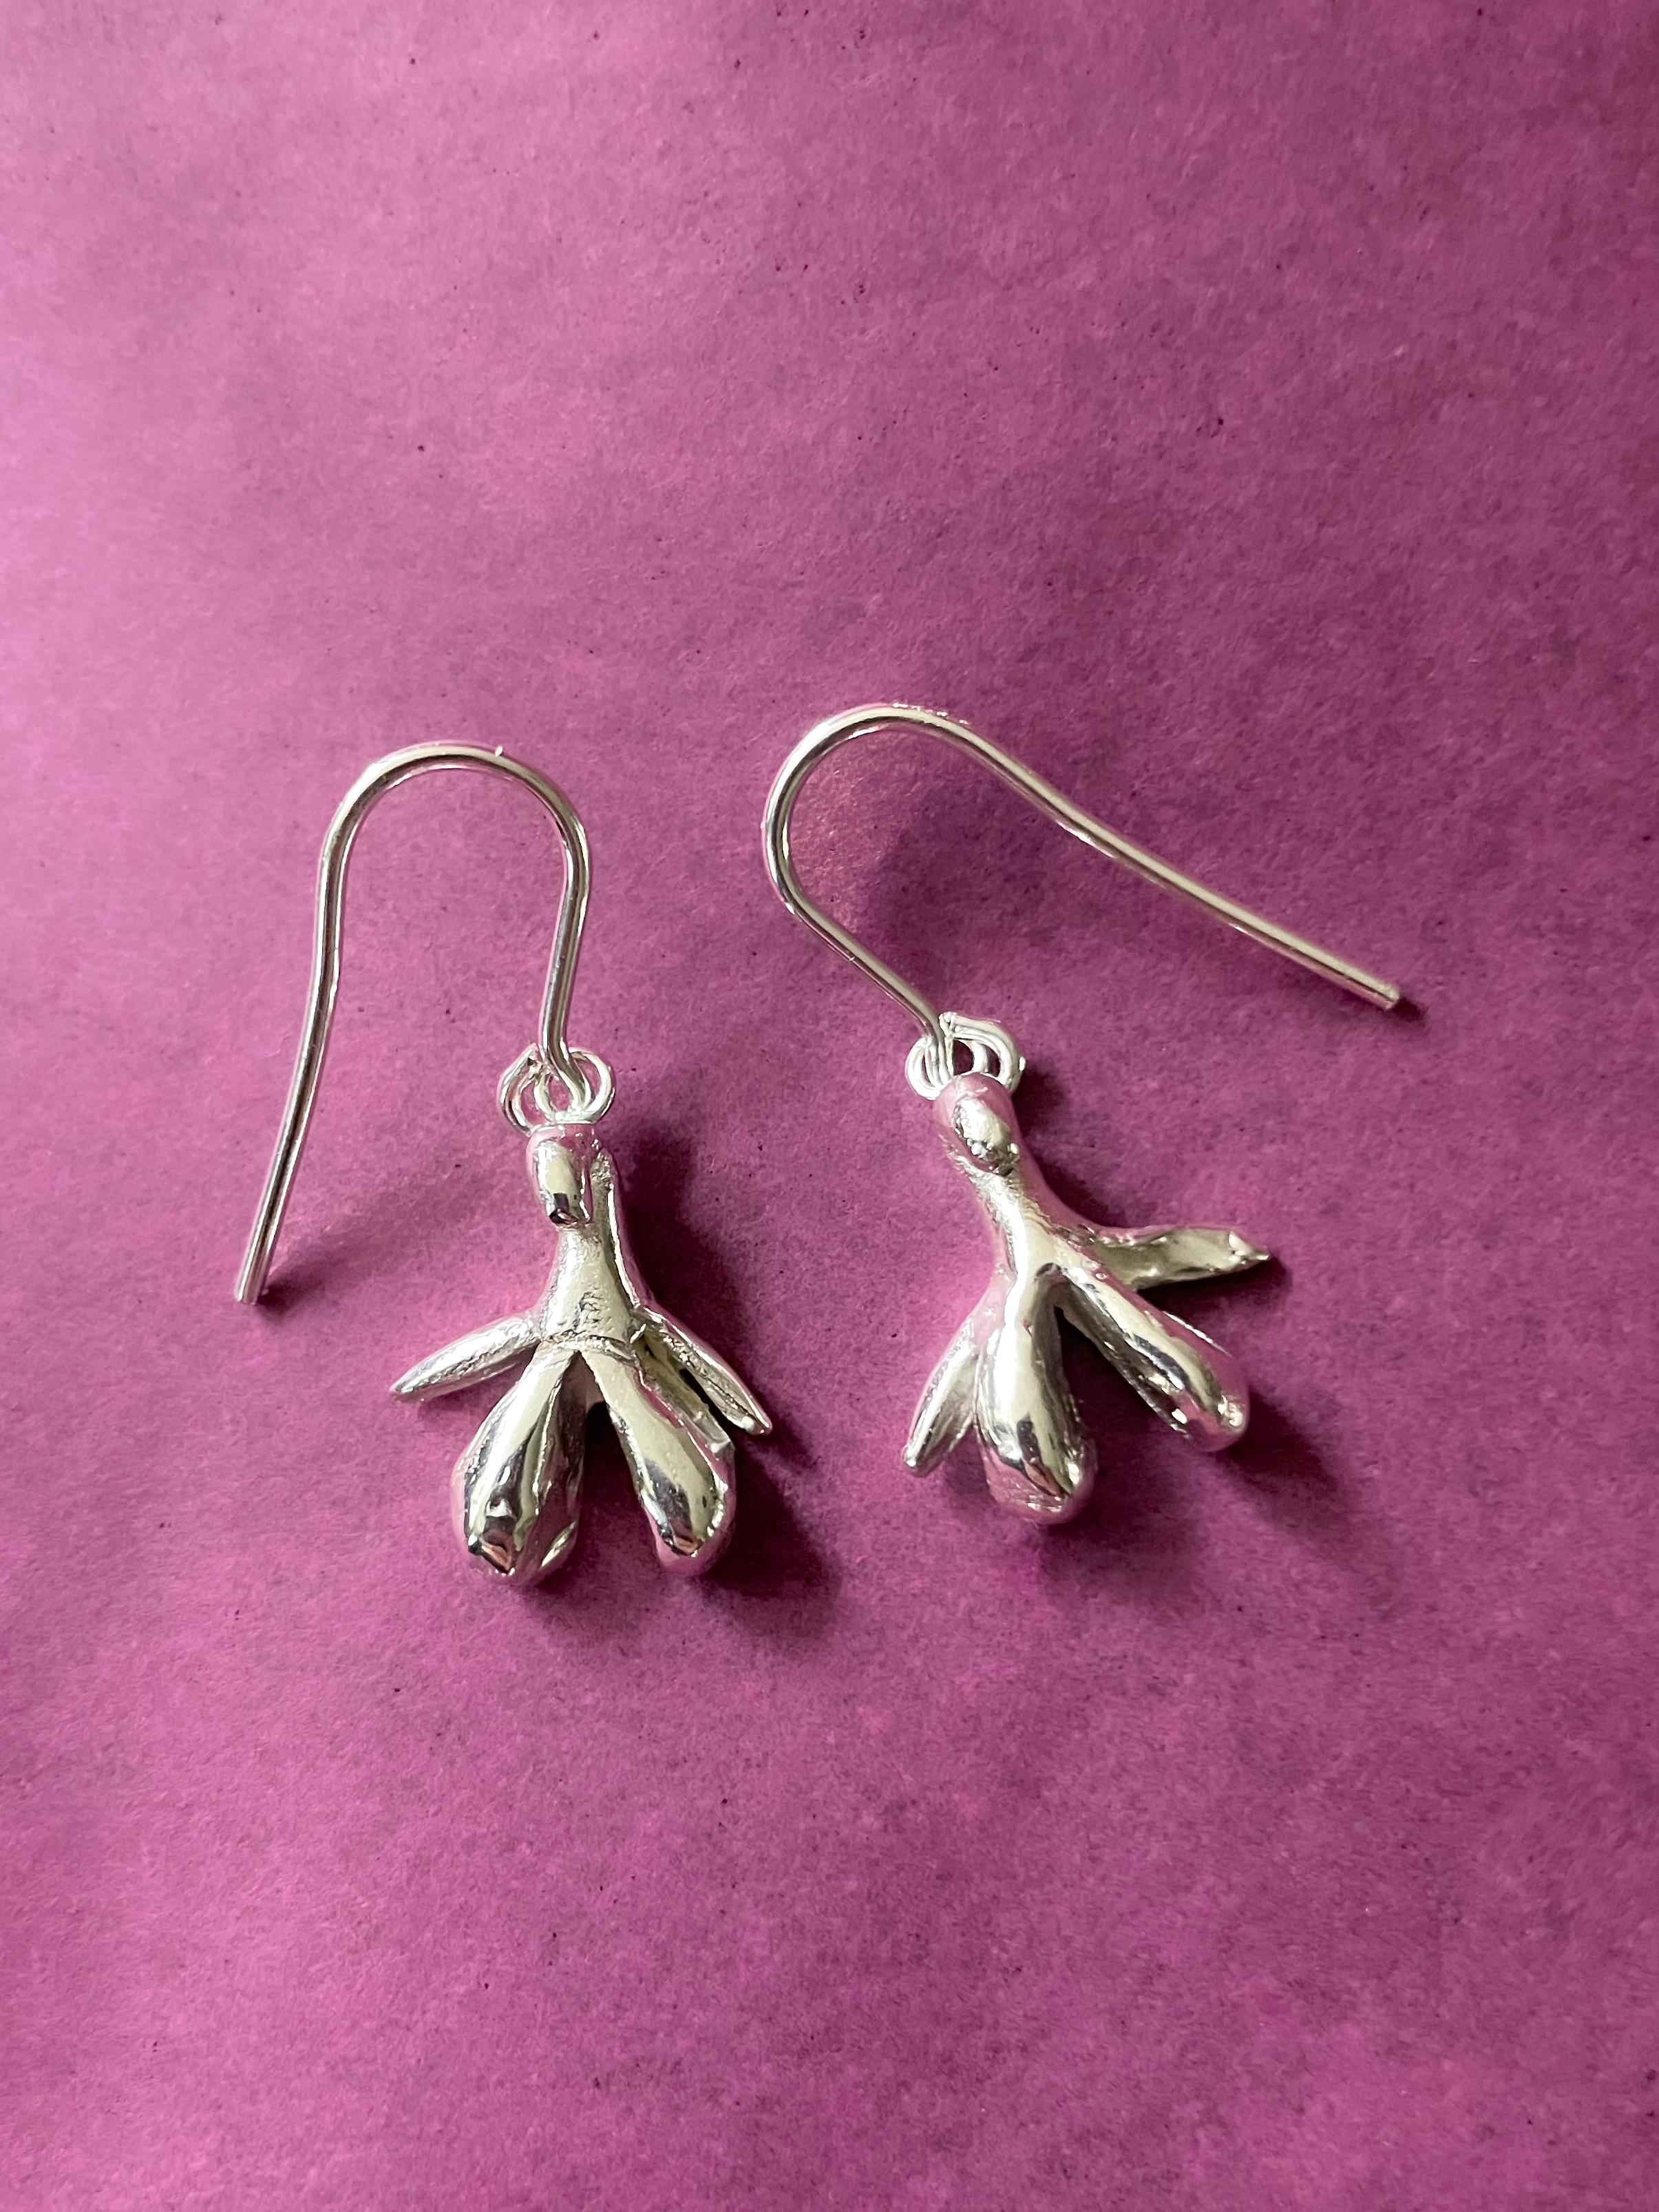 clitoris earrings cast in silver after workshop